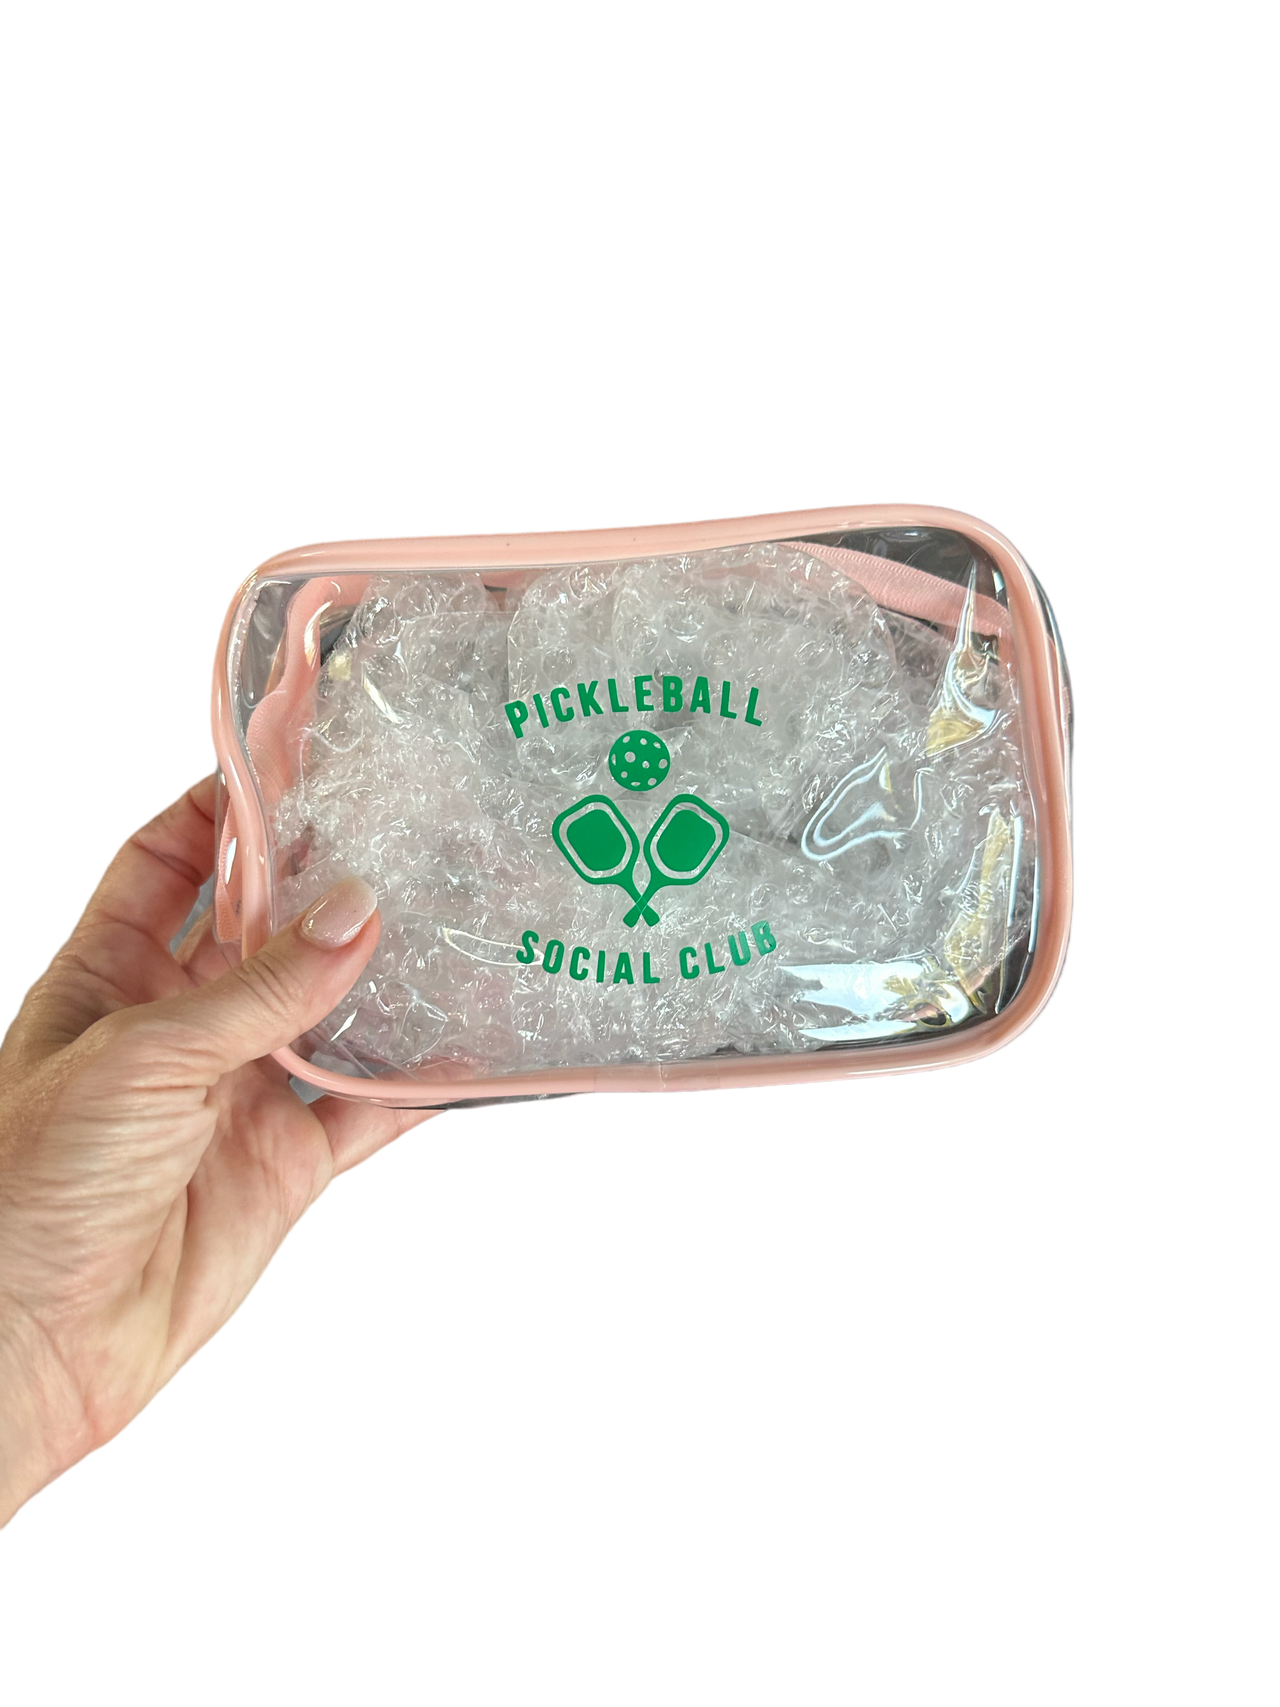 Pickleball Social Club - clear cosmetic bag